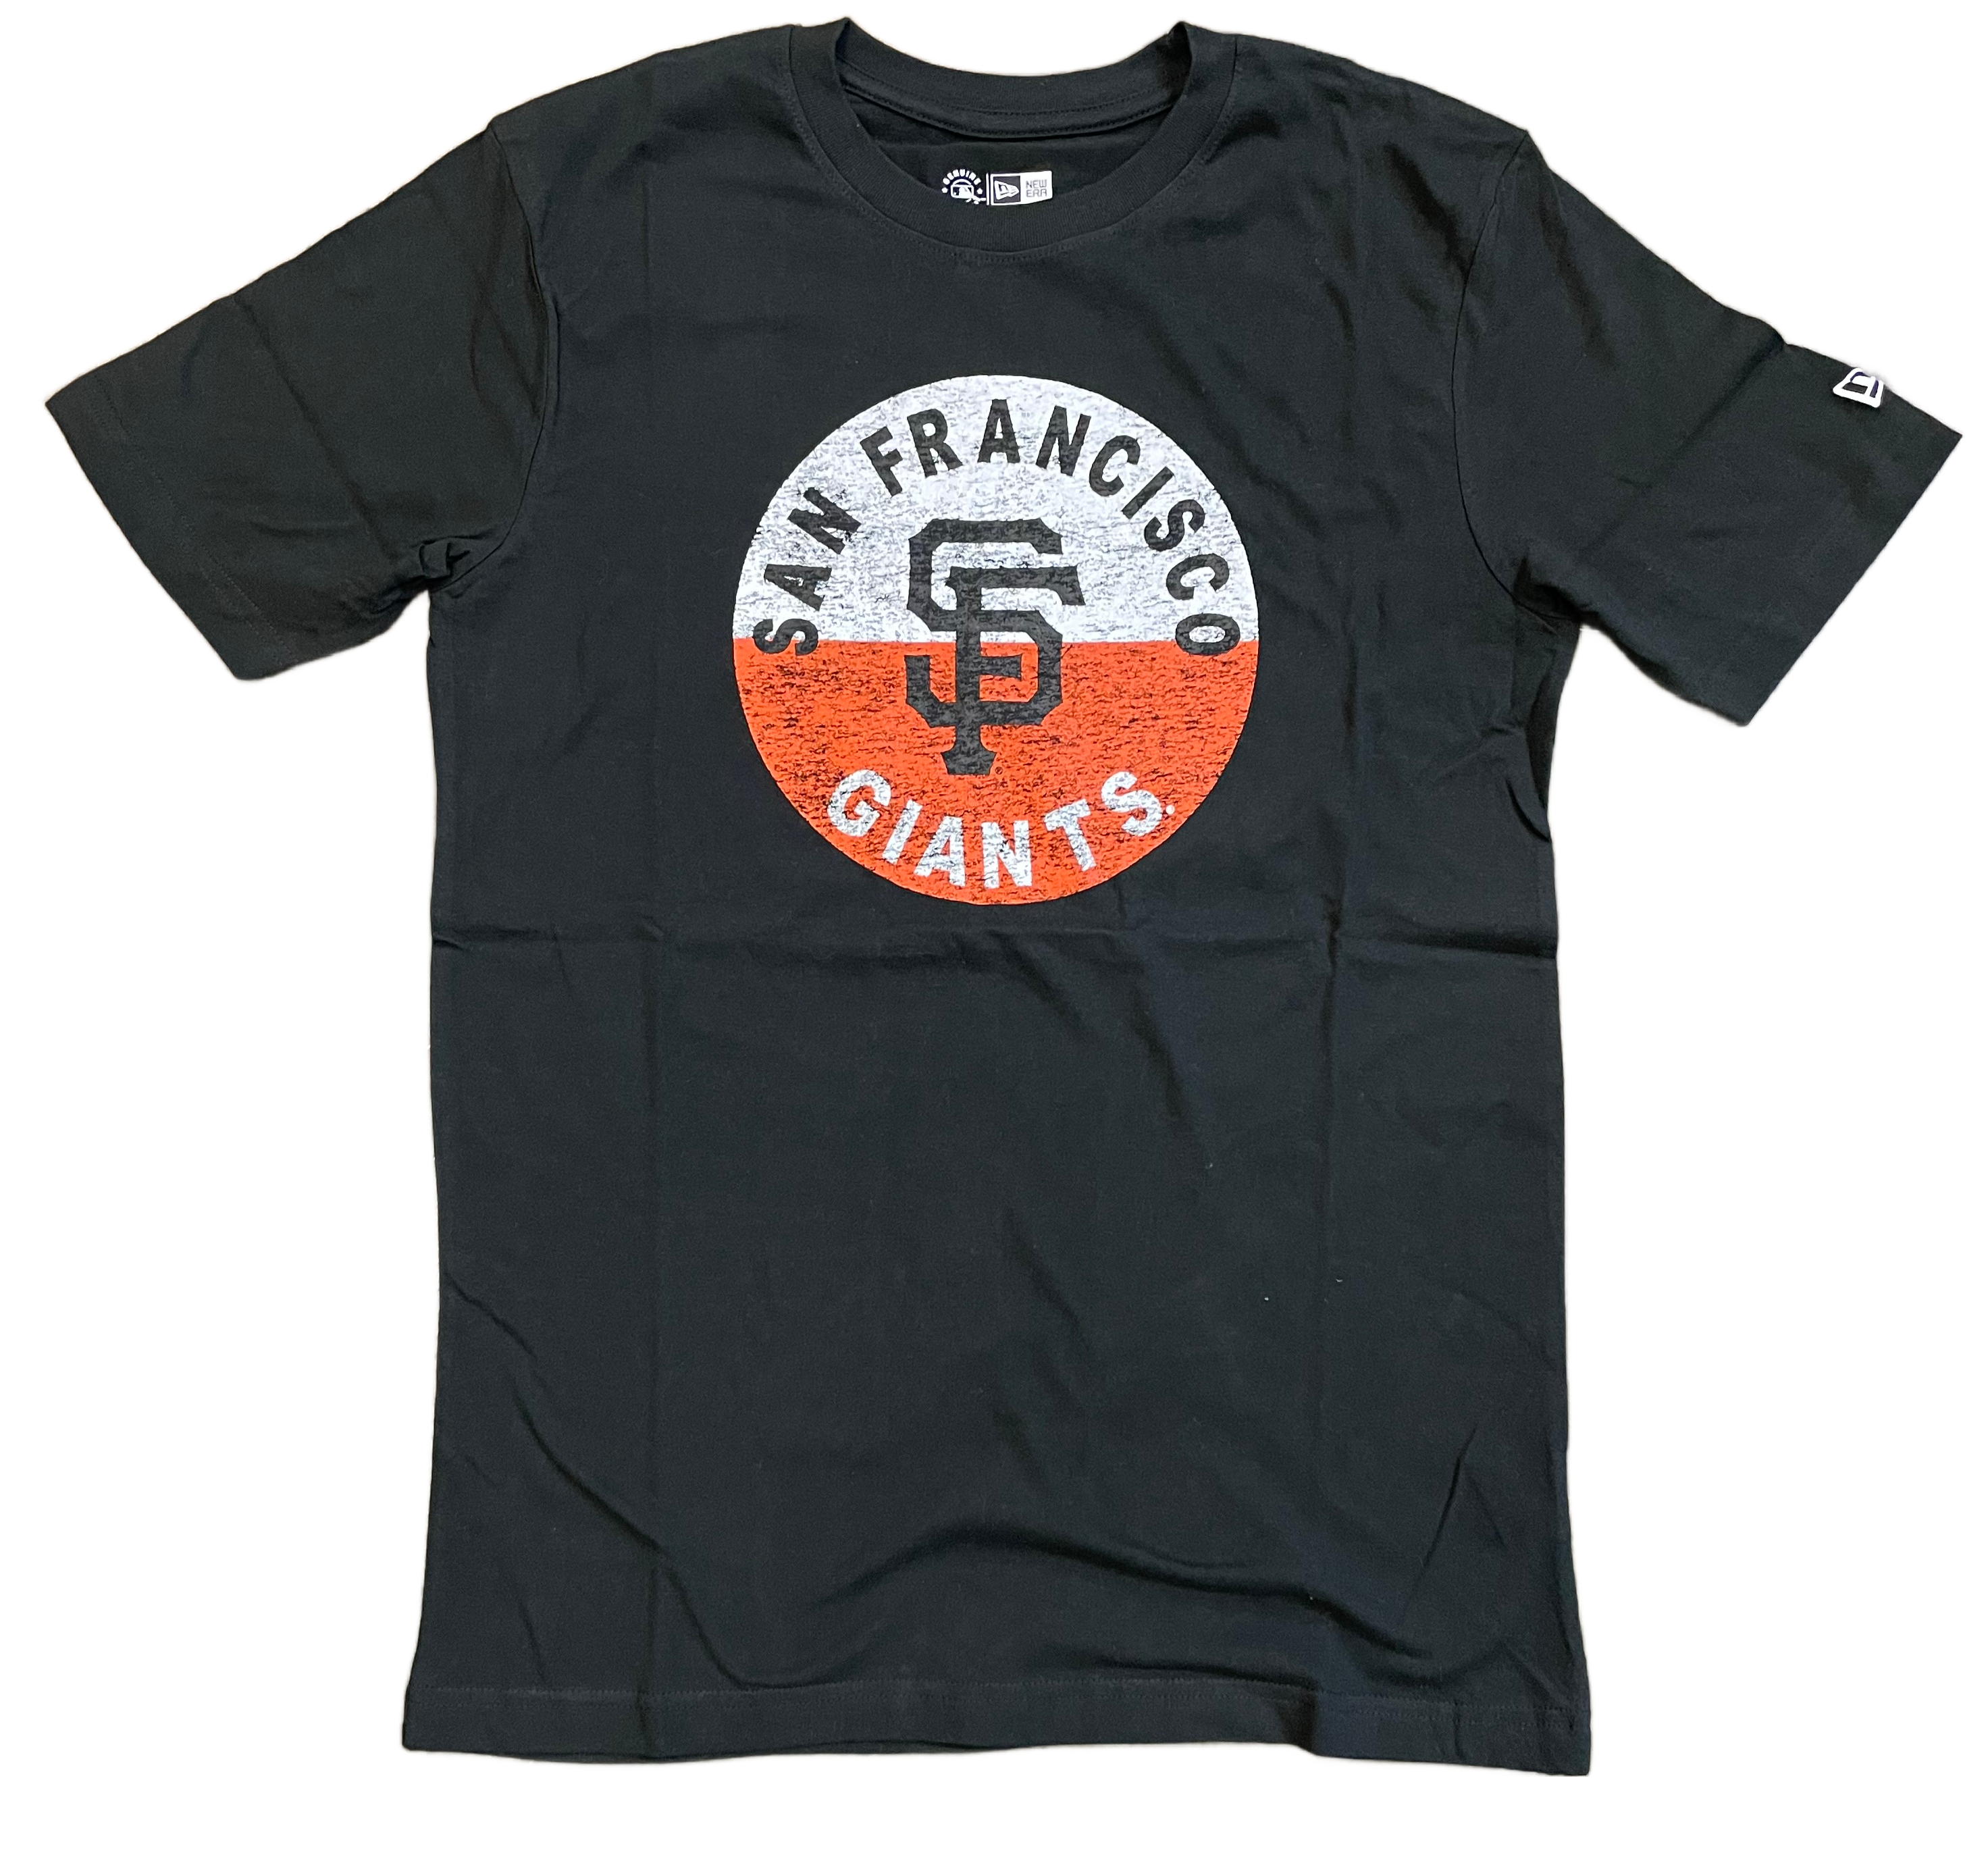 New Era Men's San Francisco Giants T-Shirt